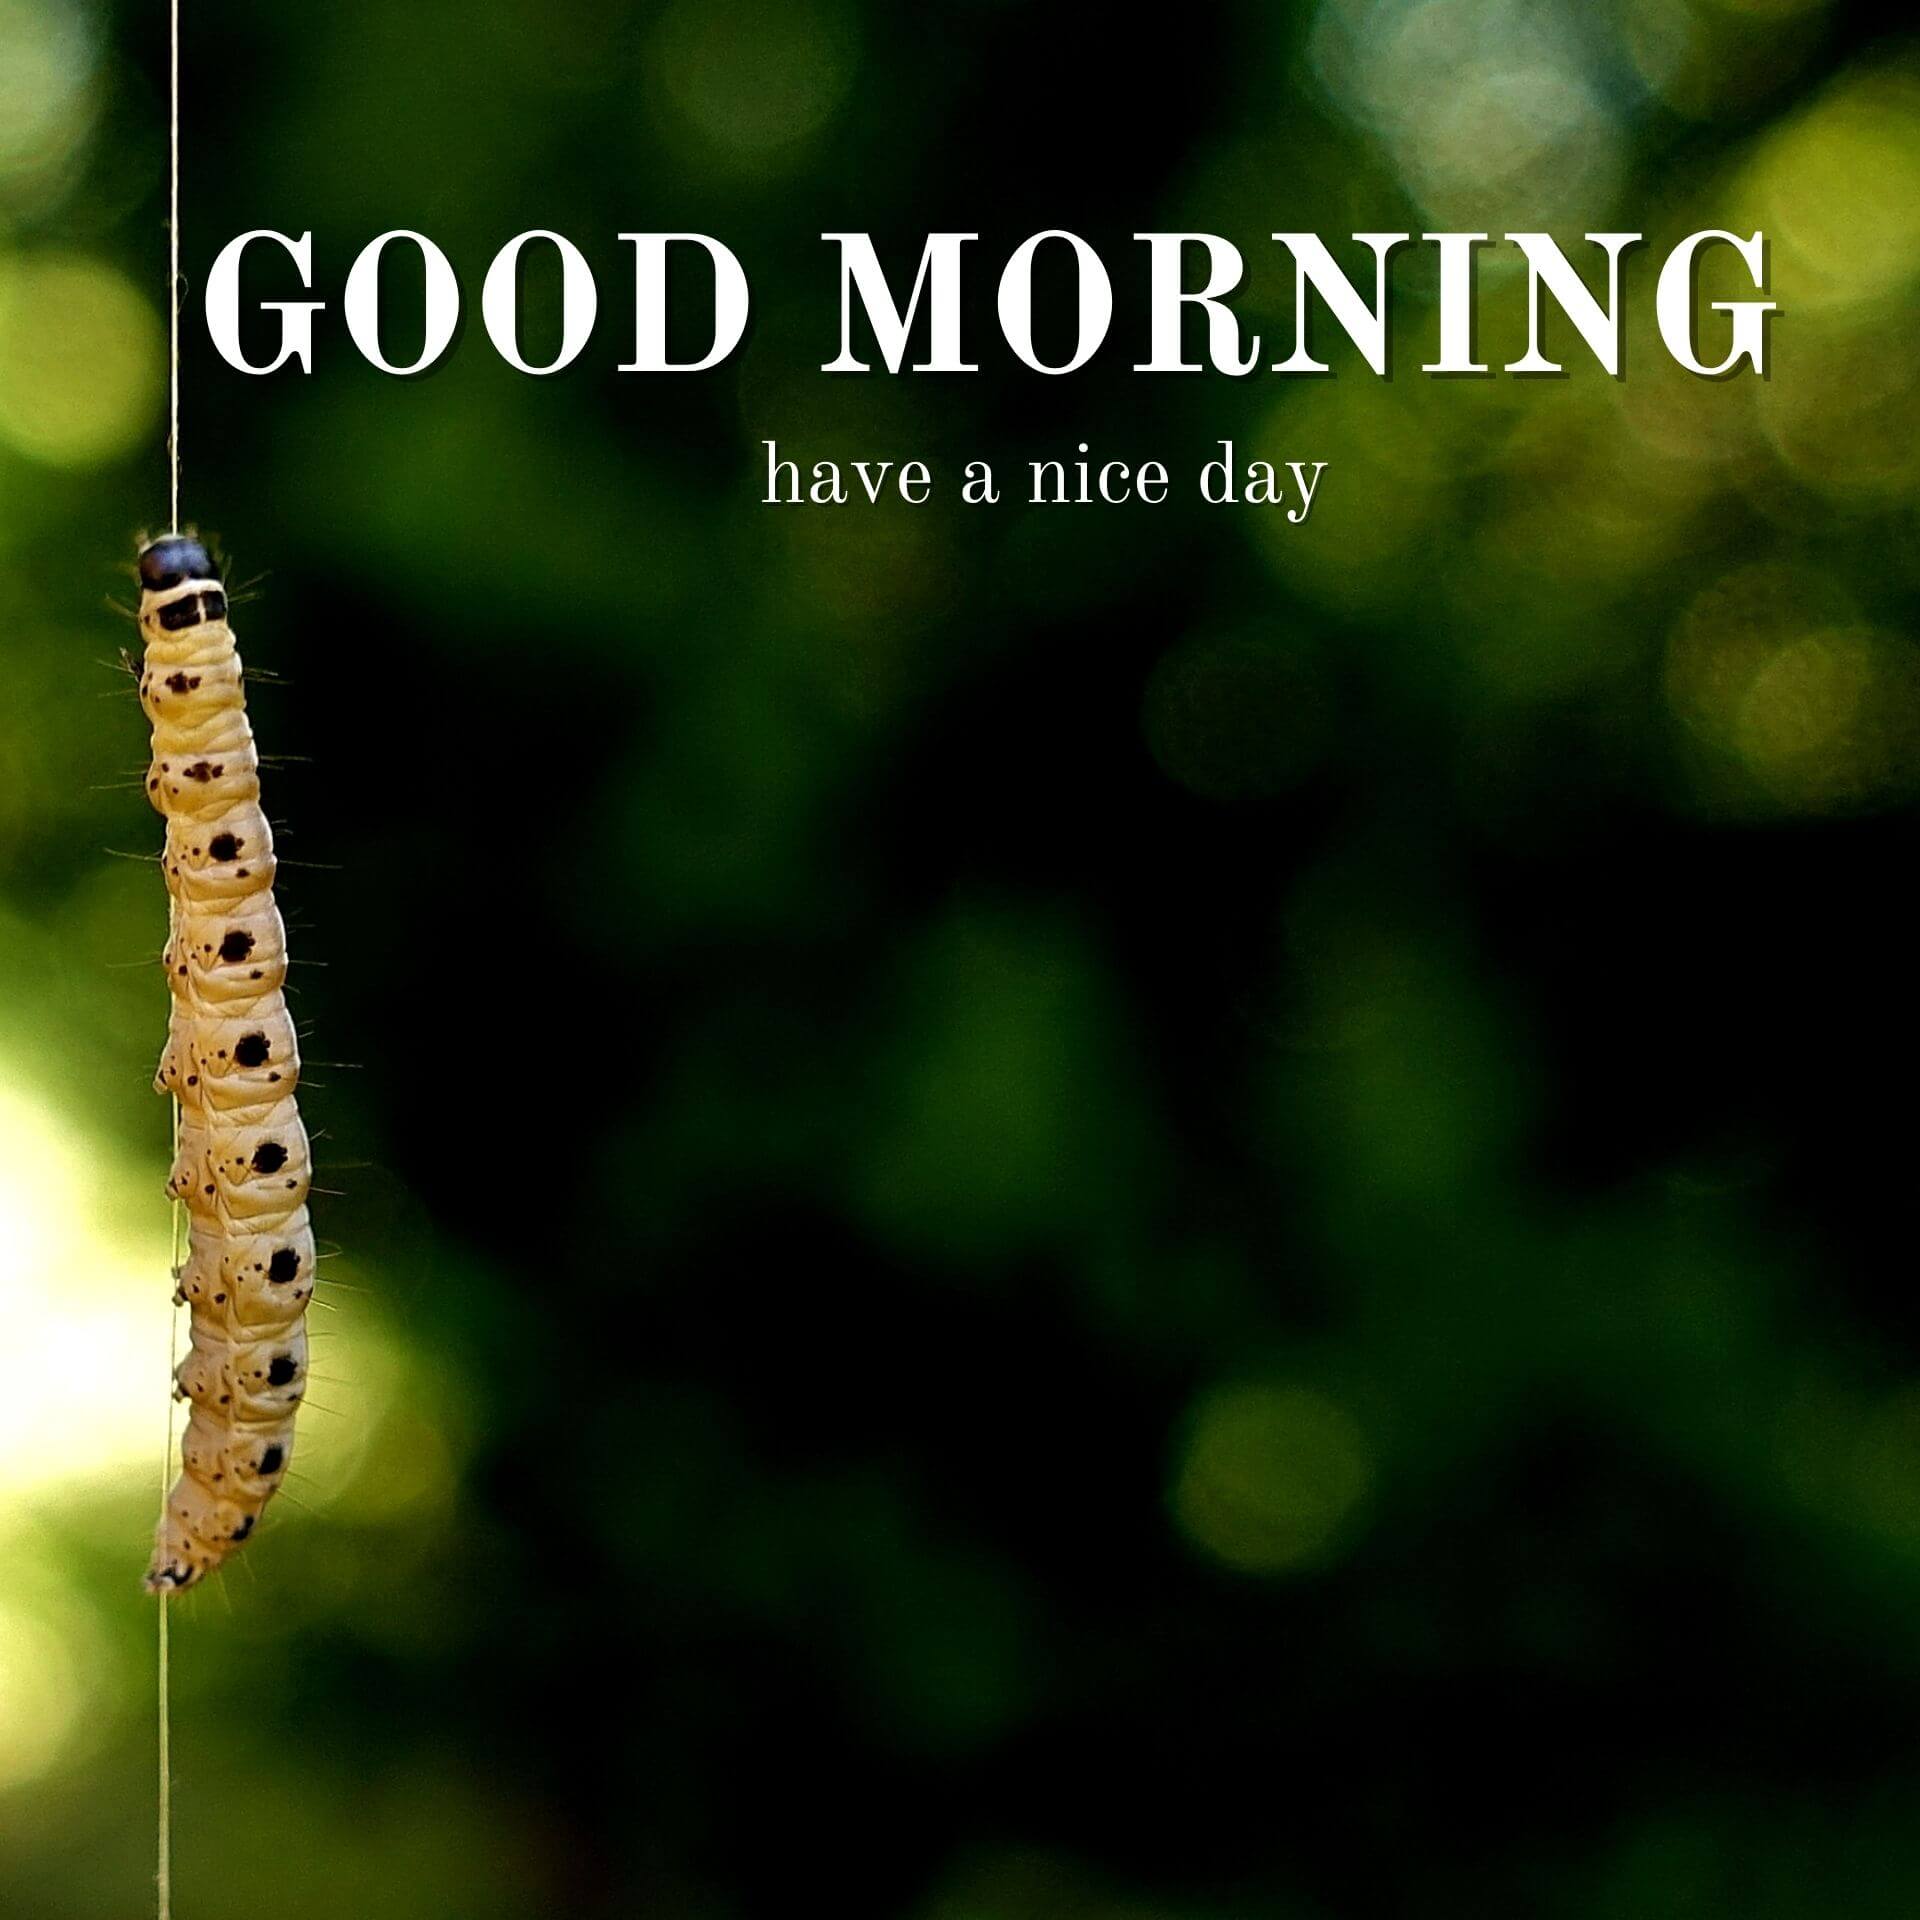 Nature Good Morning Pics Wallpaper for Facebook